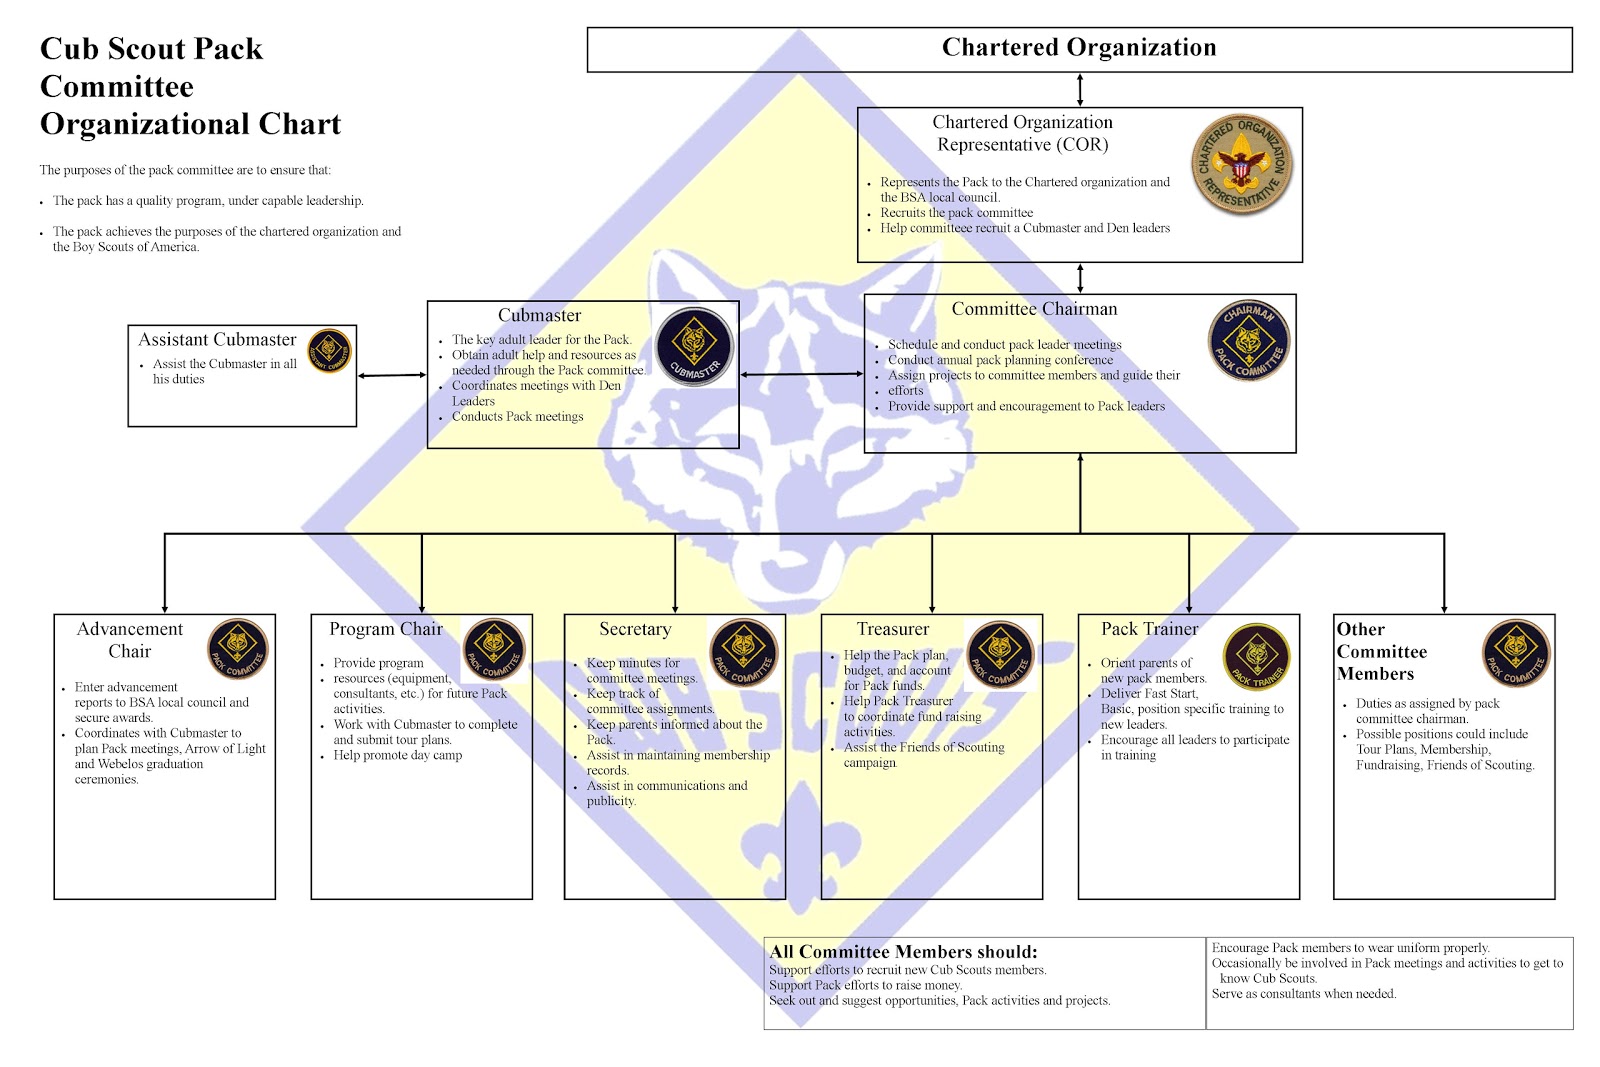 Boy Scout Organization Chart